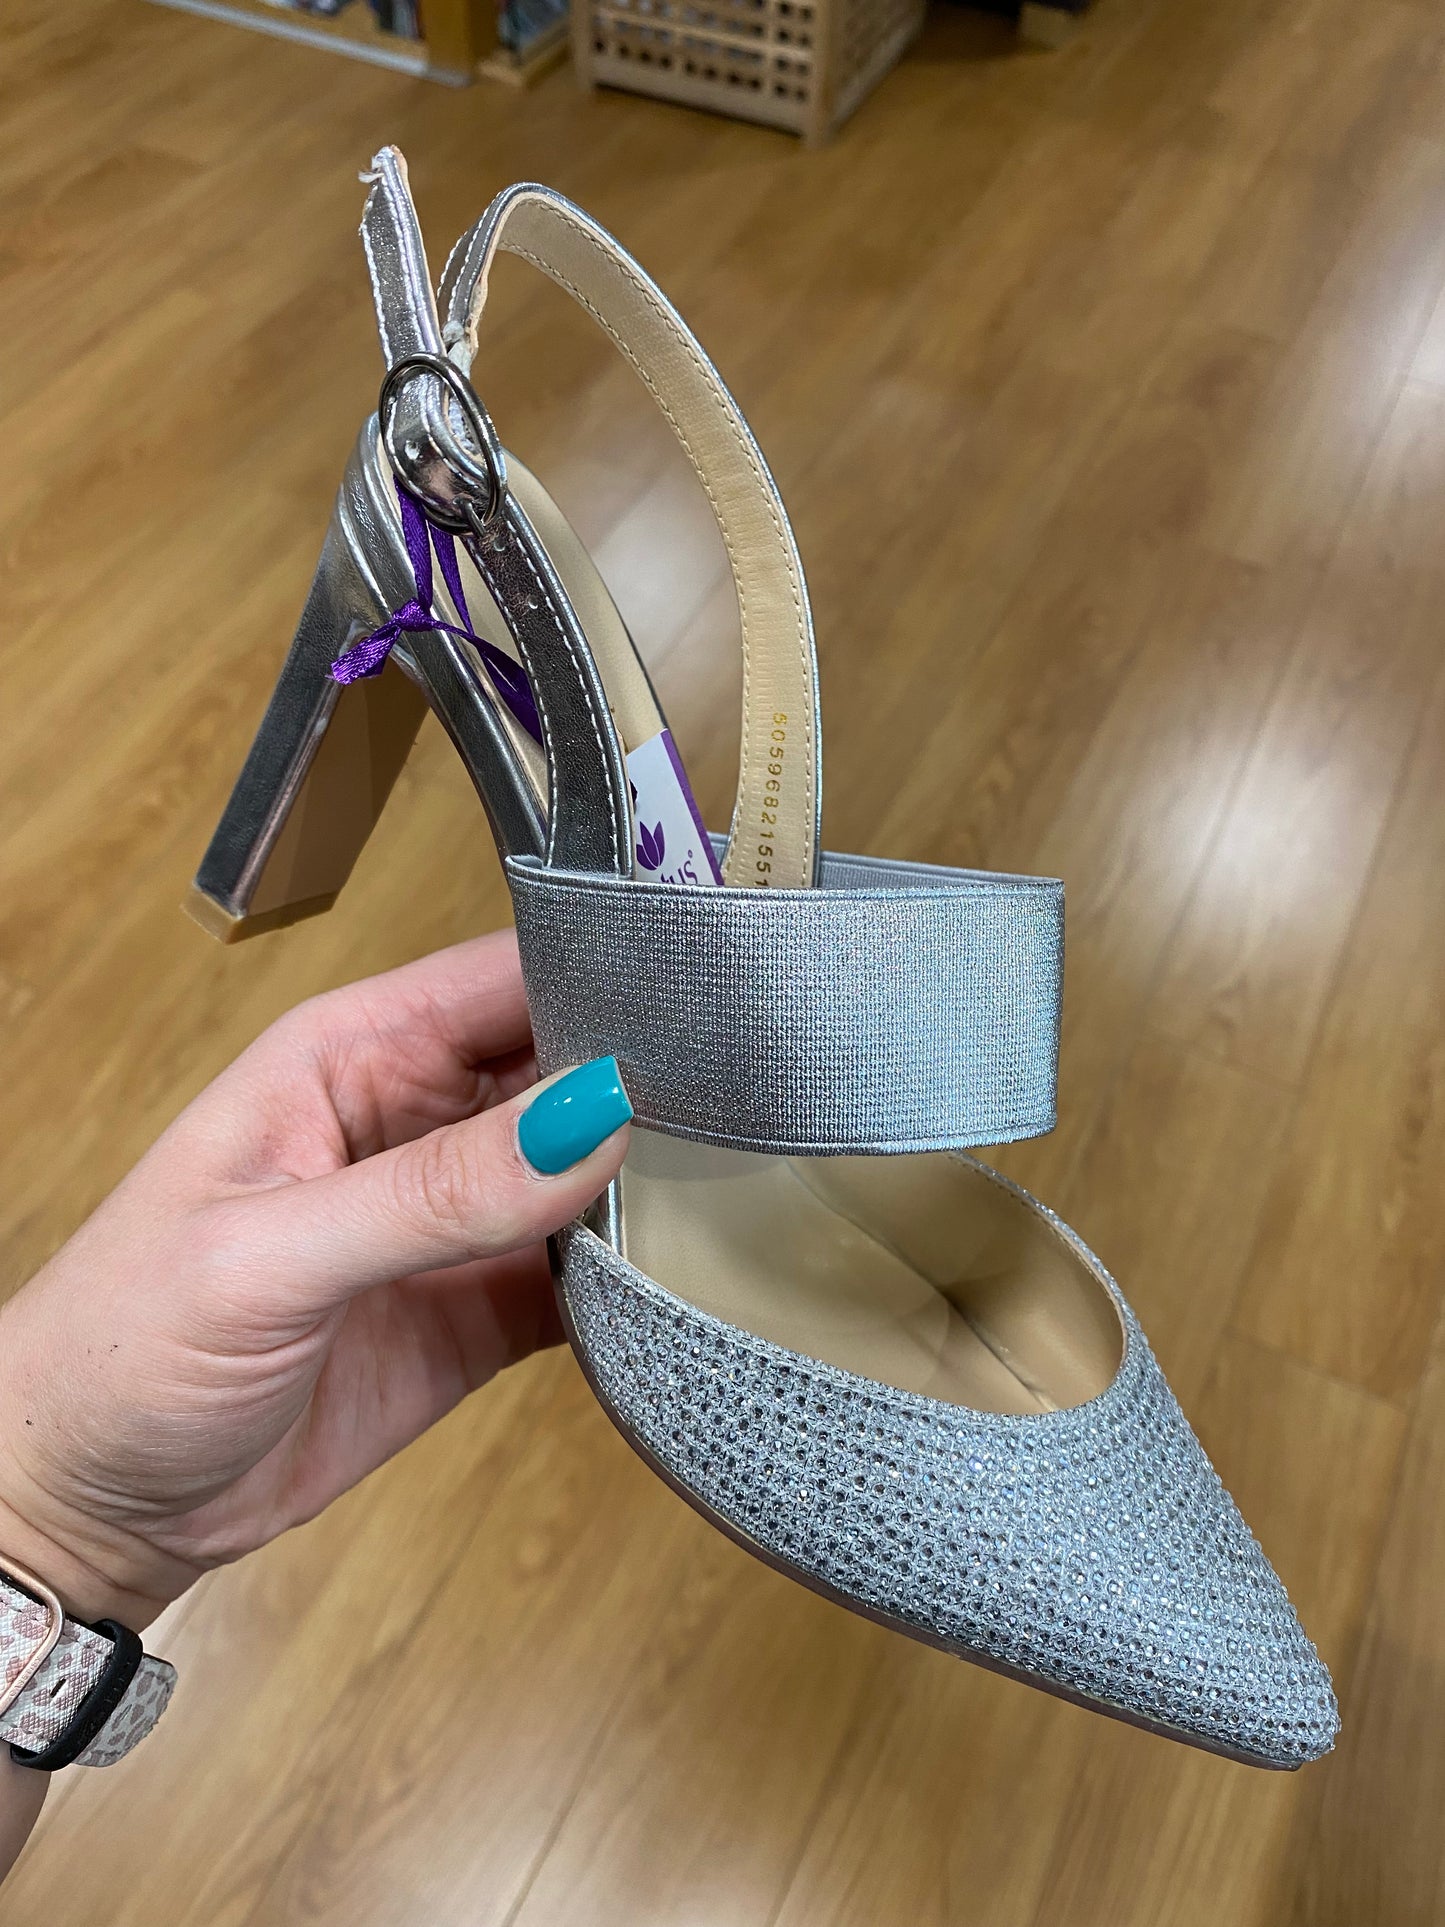 Lotus Joie Silver Diamante Shoe